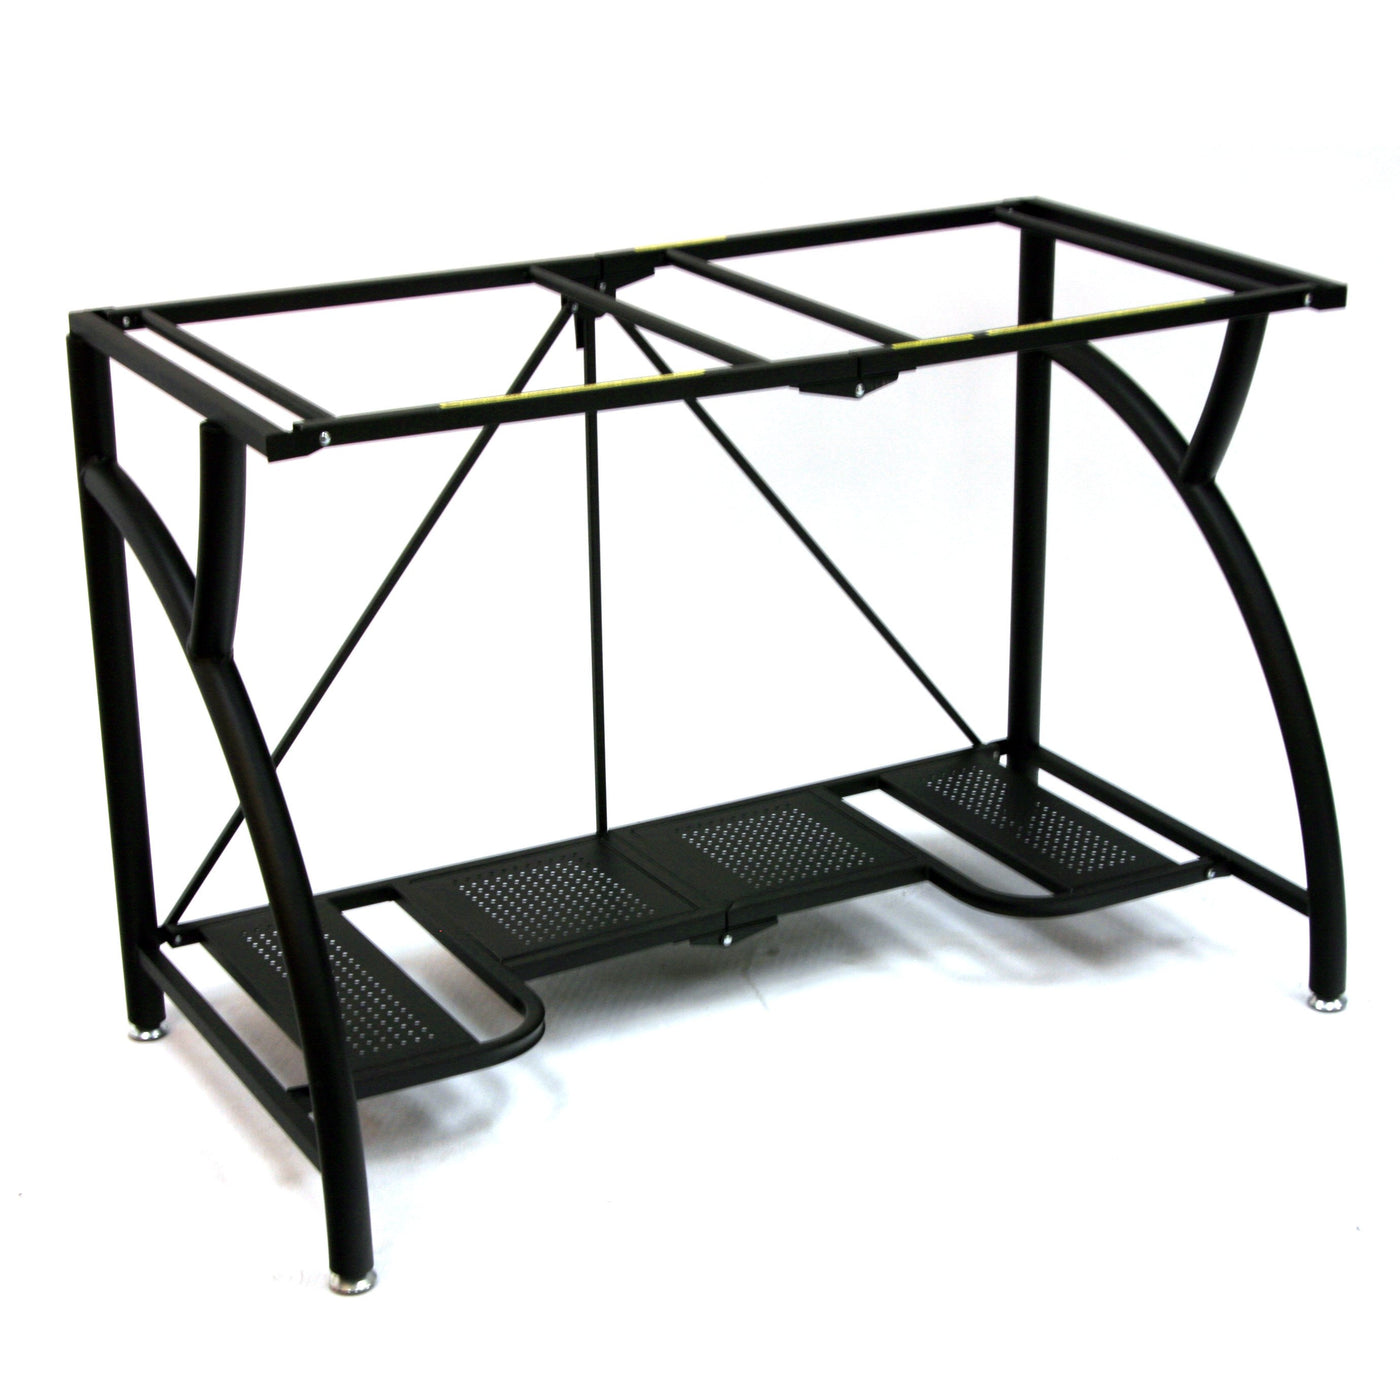 Large Foldout Two-Shelf Desk